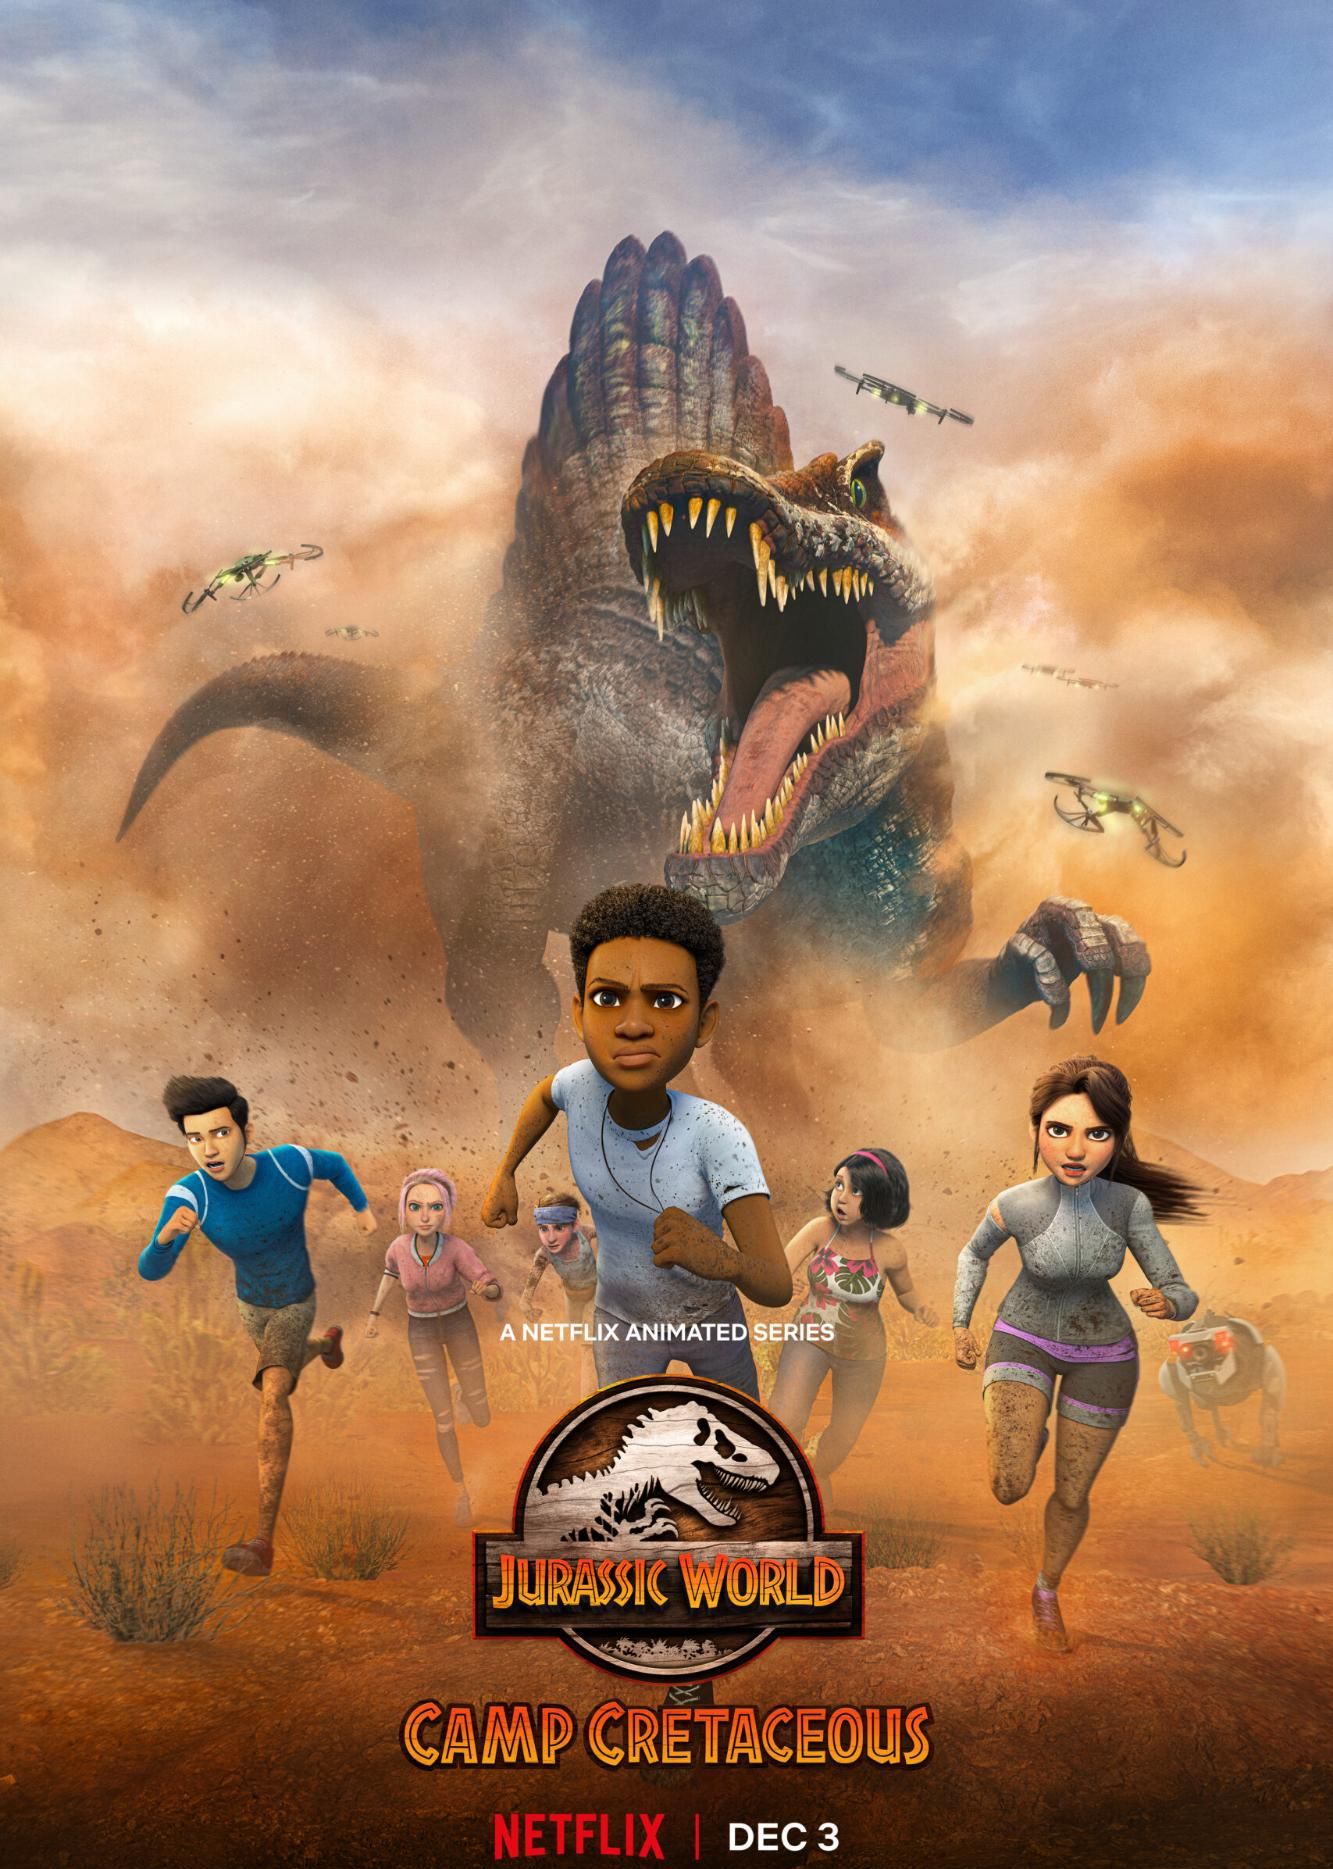 Is Jurassic World Camp Cretaceous Season 4 on Netflix